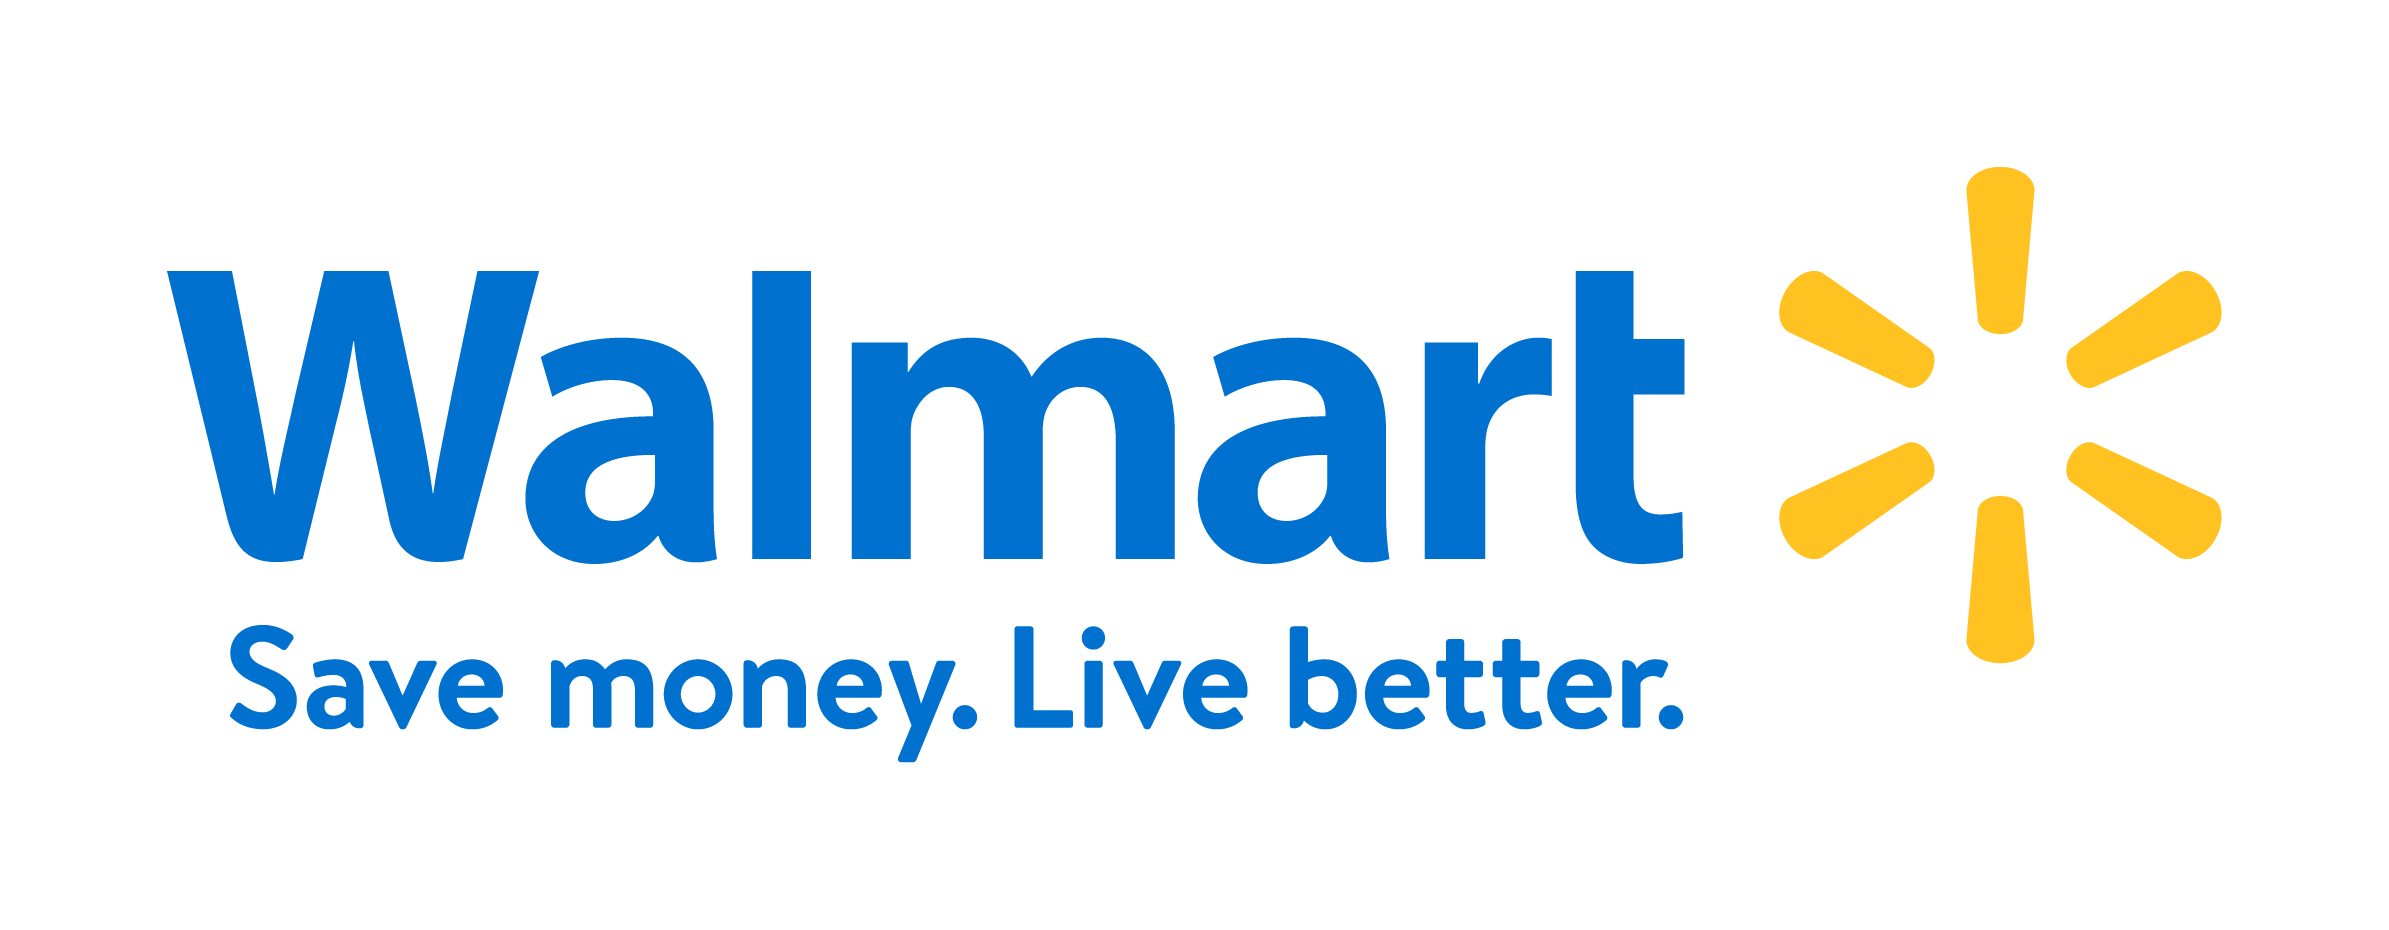 rebranding-process-walmart